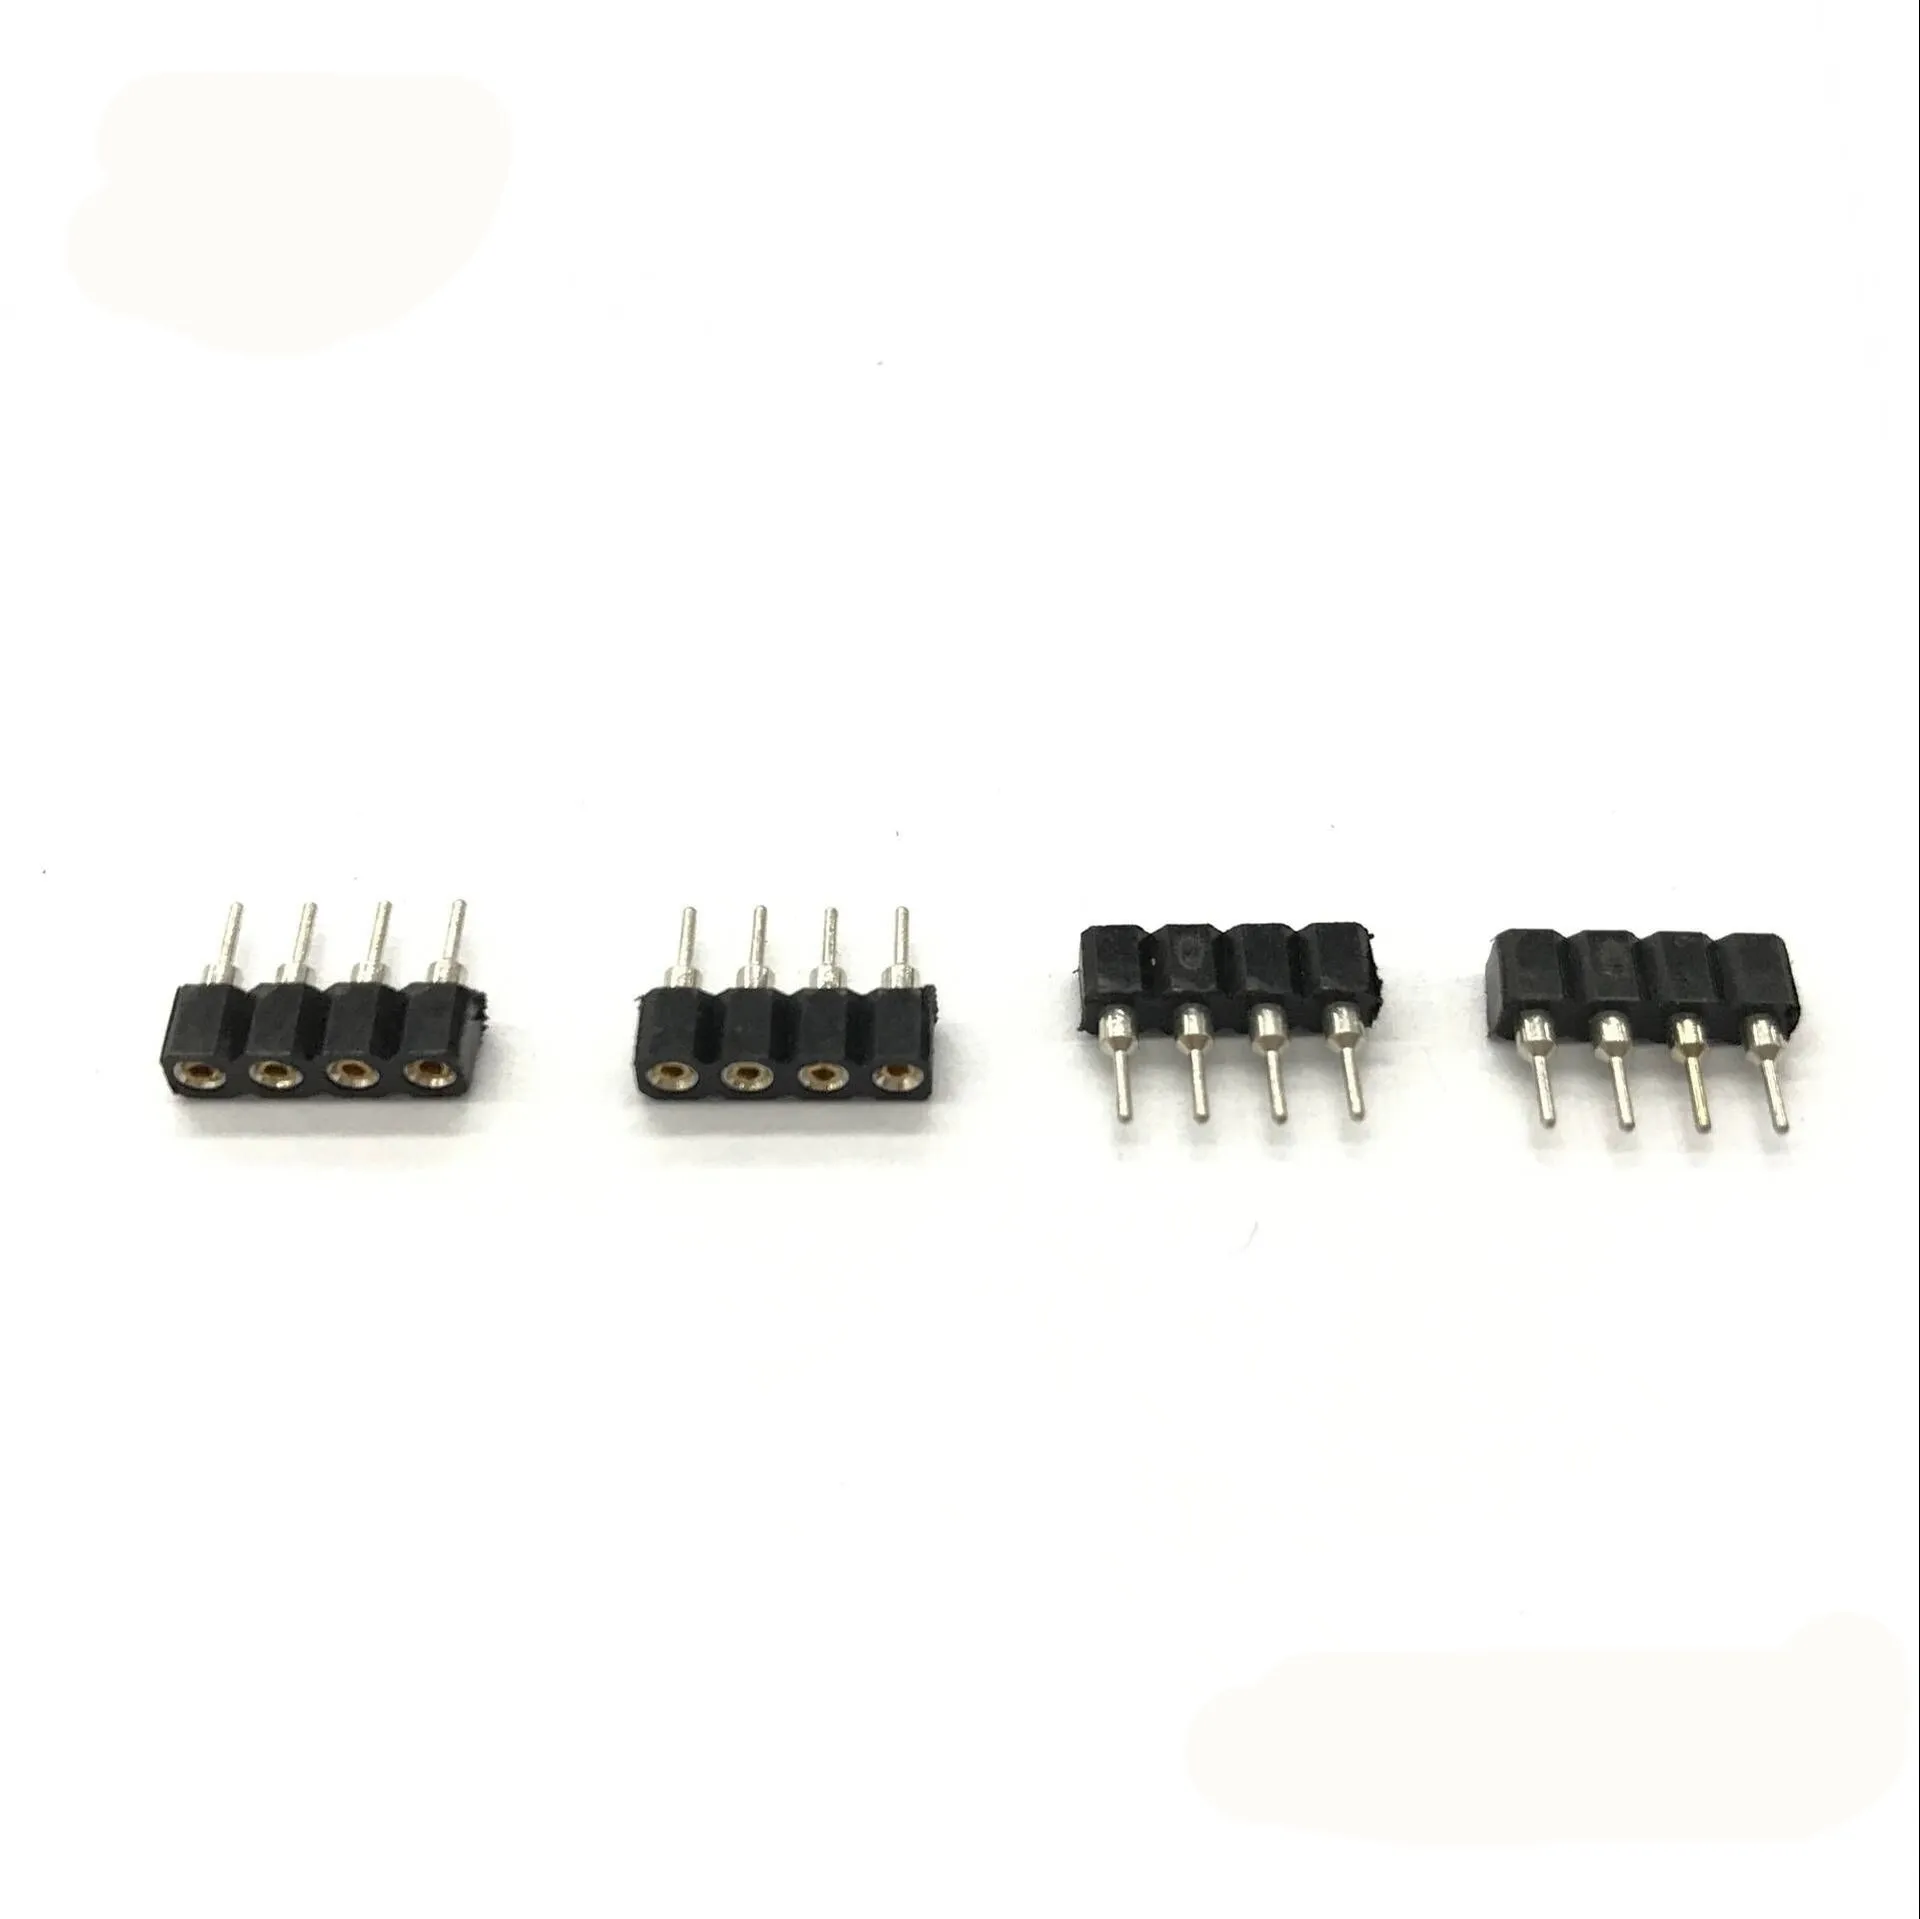 100 stcs/200 stcs/500 stcs/4pin RGB -connector LED 4 pin naald mannelijk aan vrouwelijk type dubbele 4 pins DIY verbindt voor 5050 rgb LED's strip